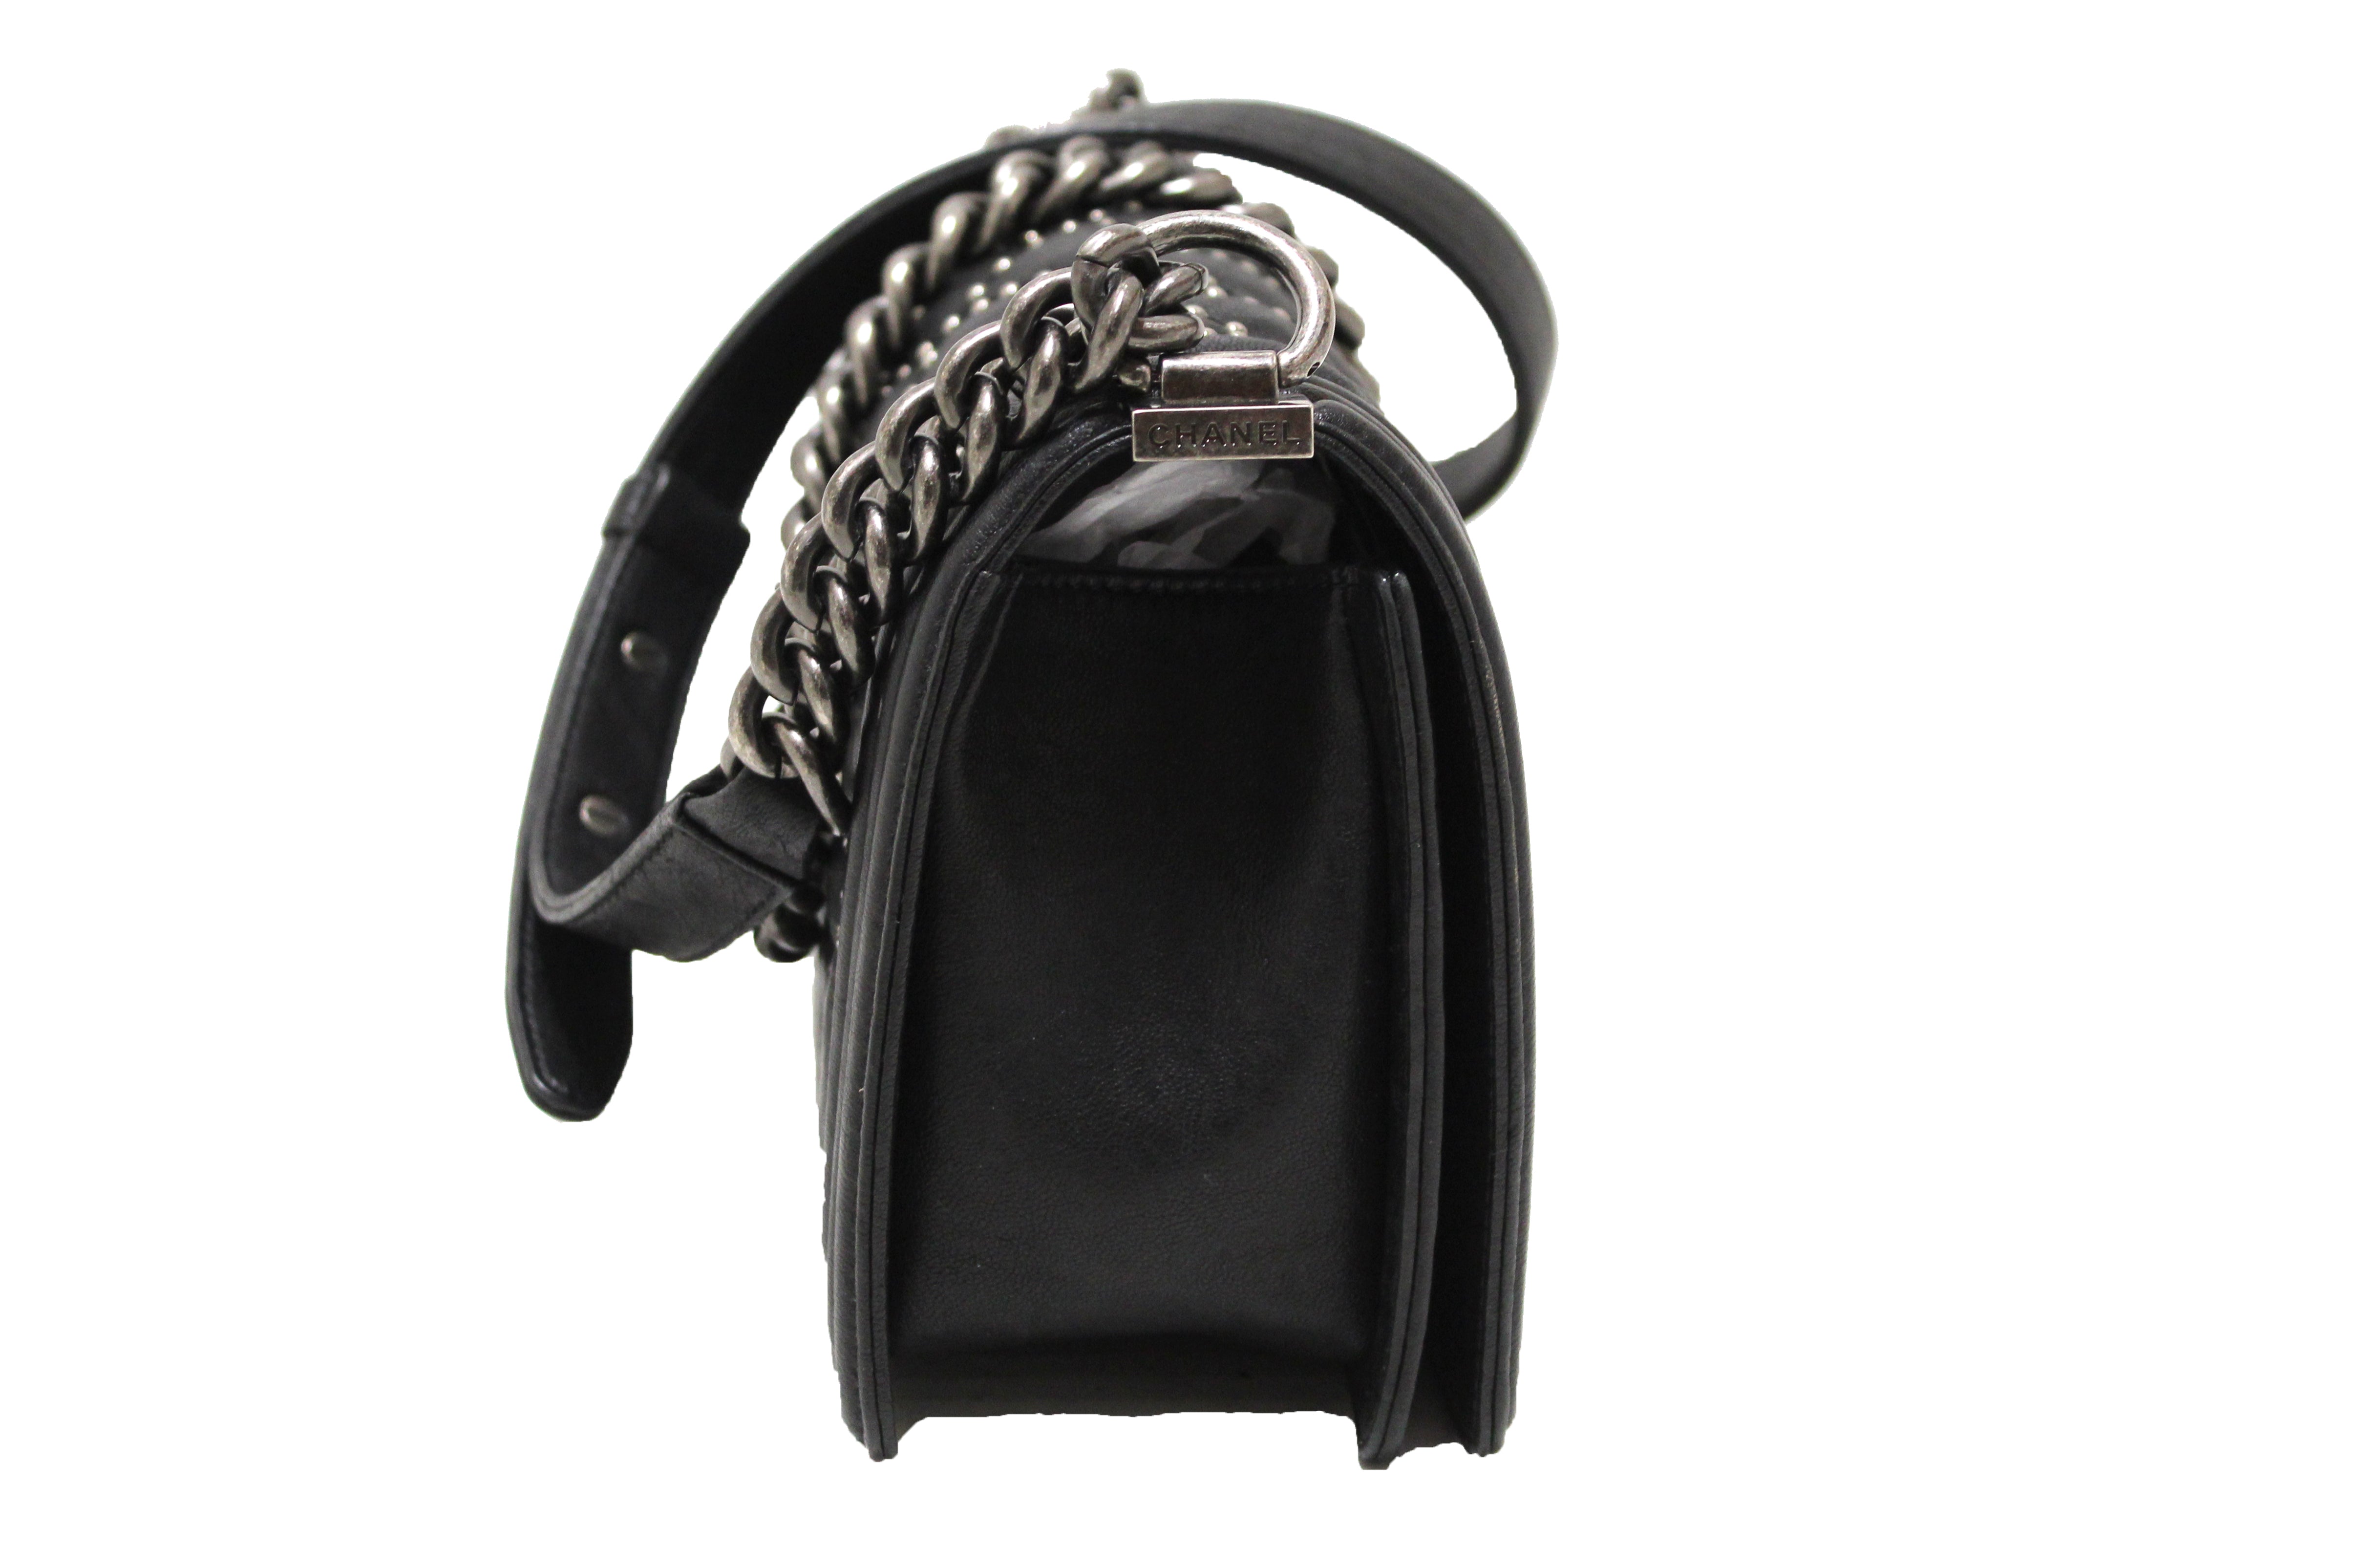 Chanel Handbags - Ann's Fabulous Closeouts